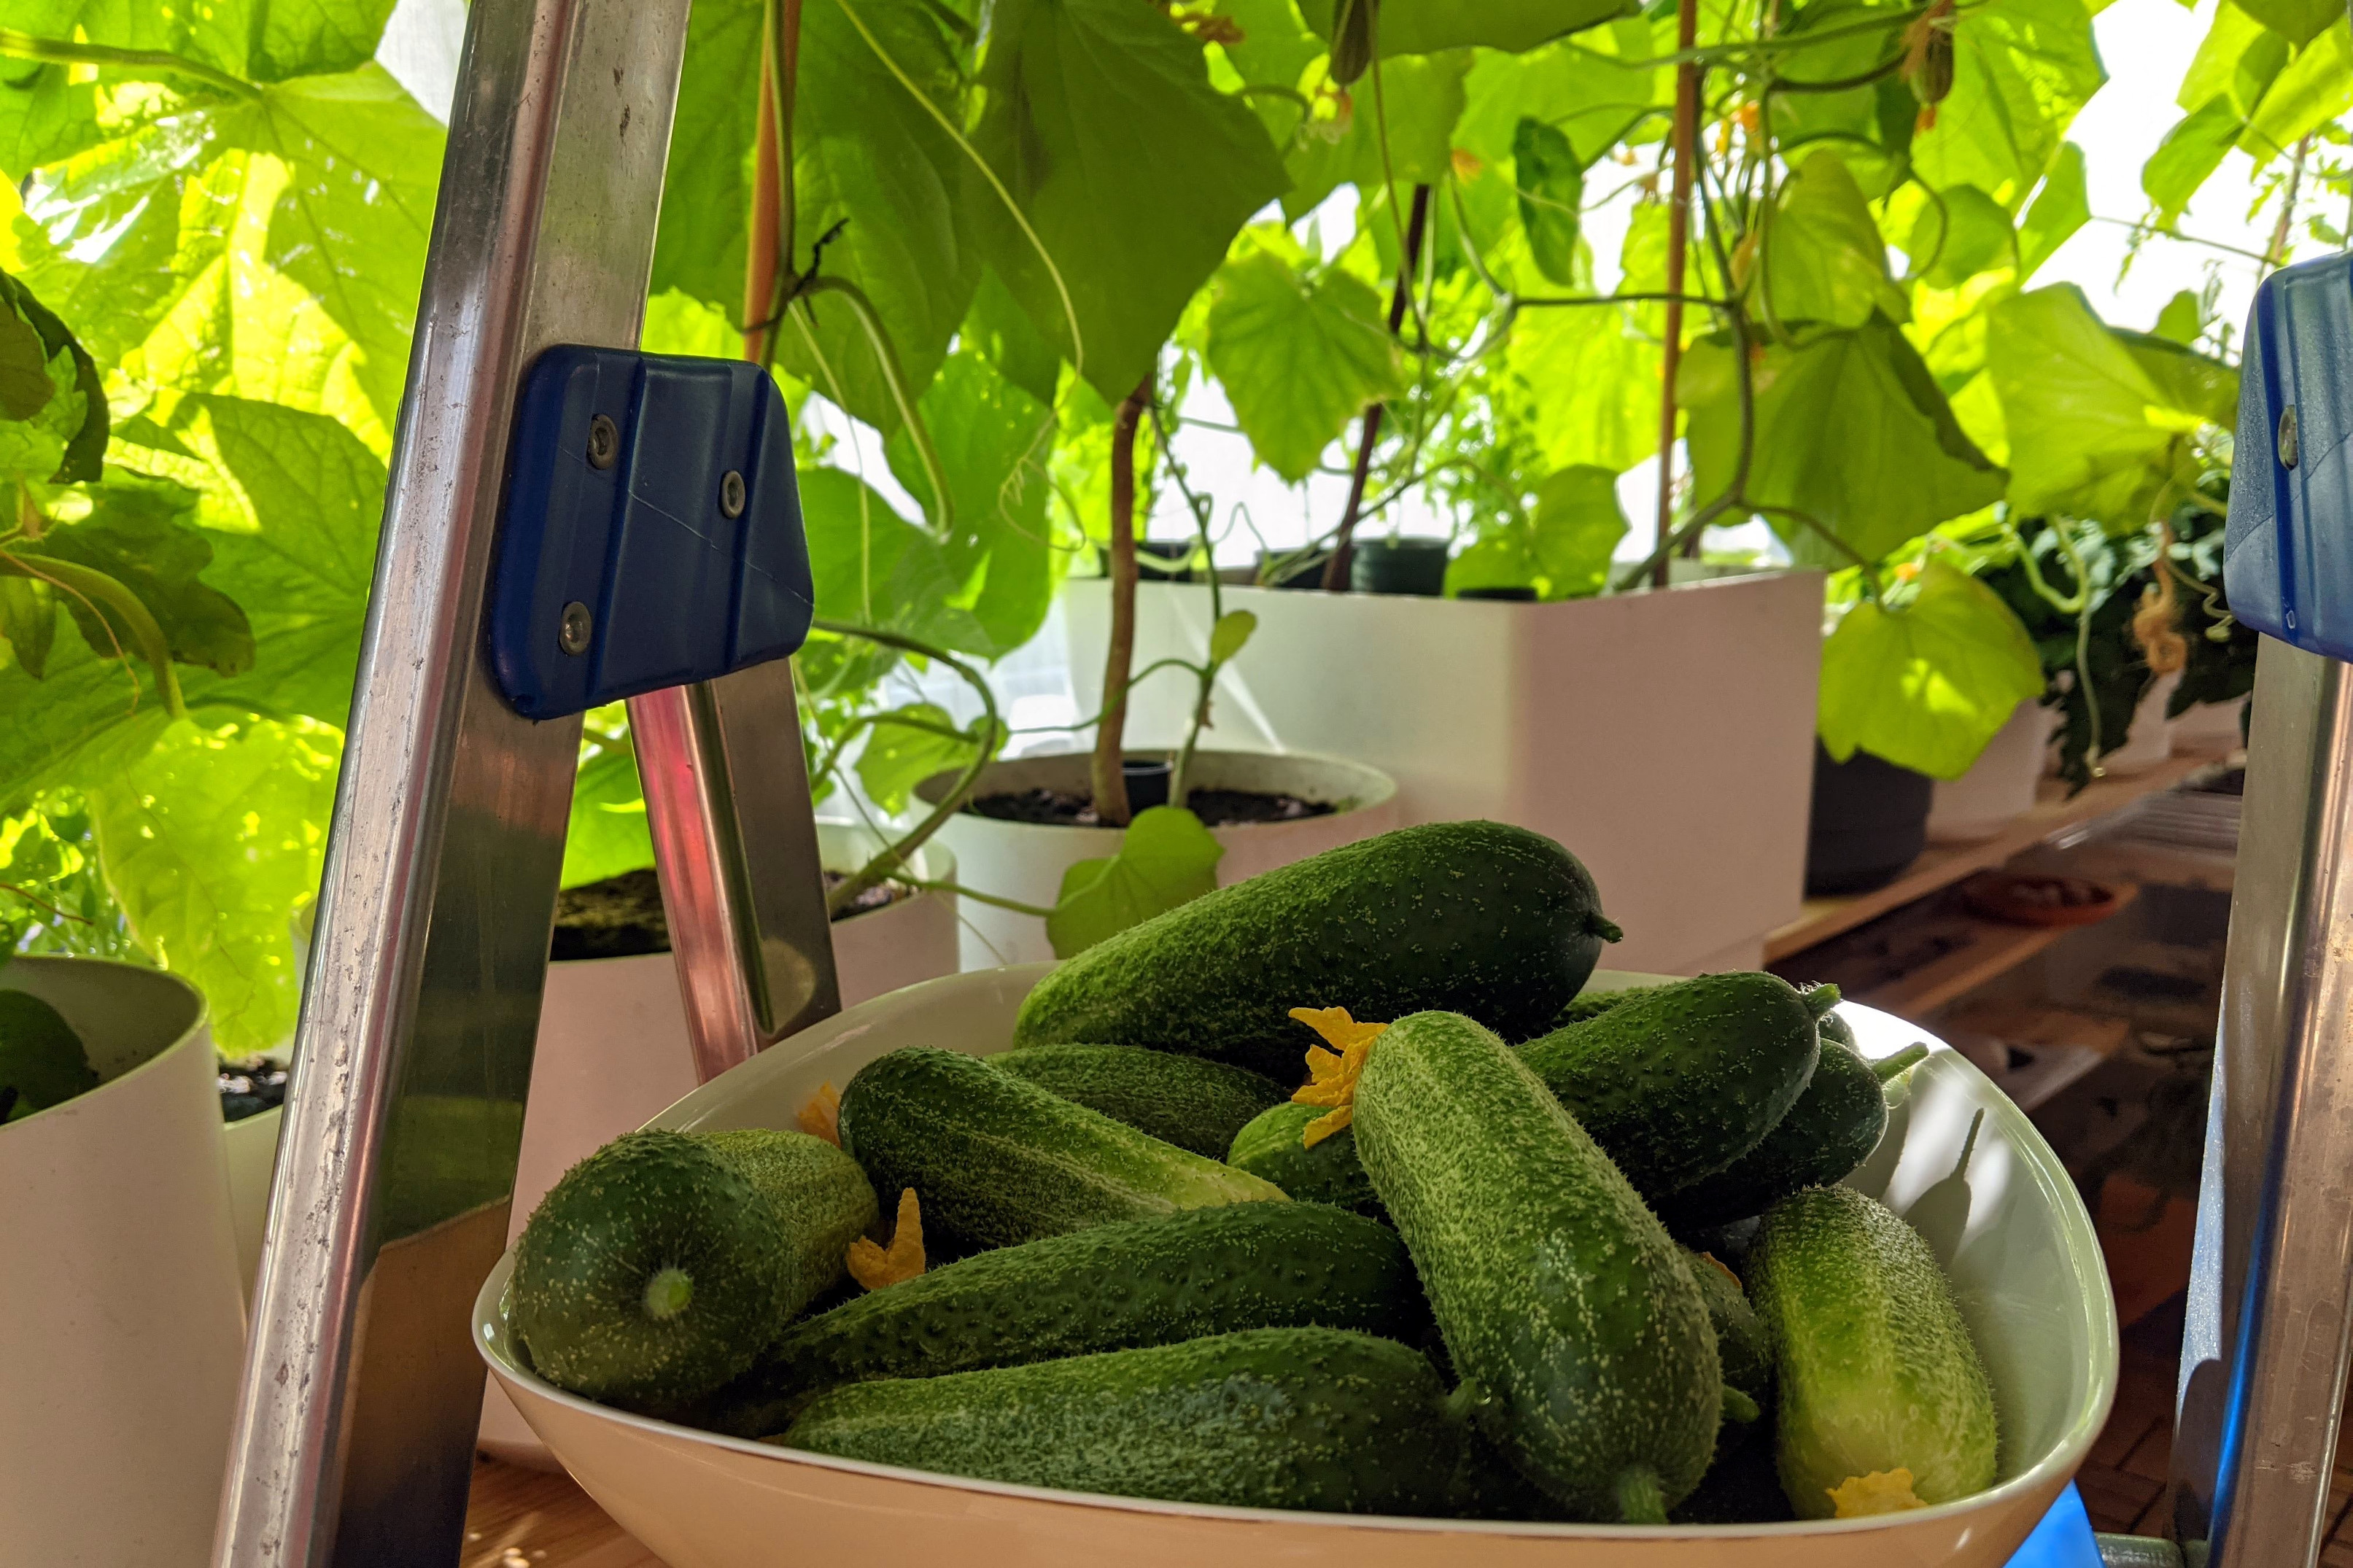 Today's cucumber harvest